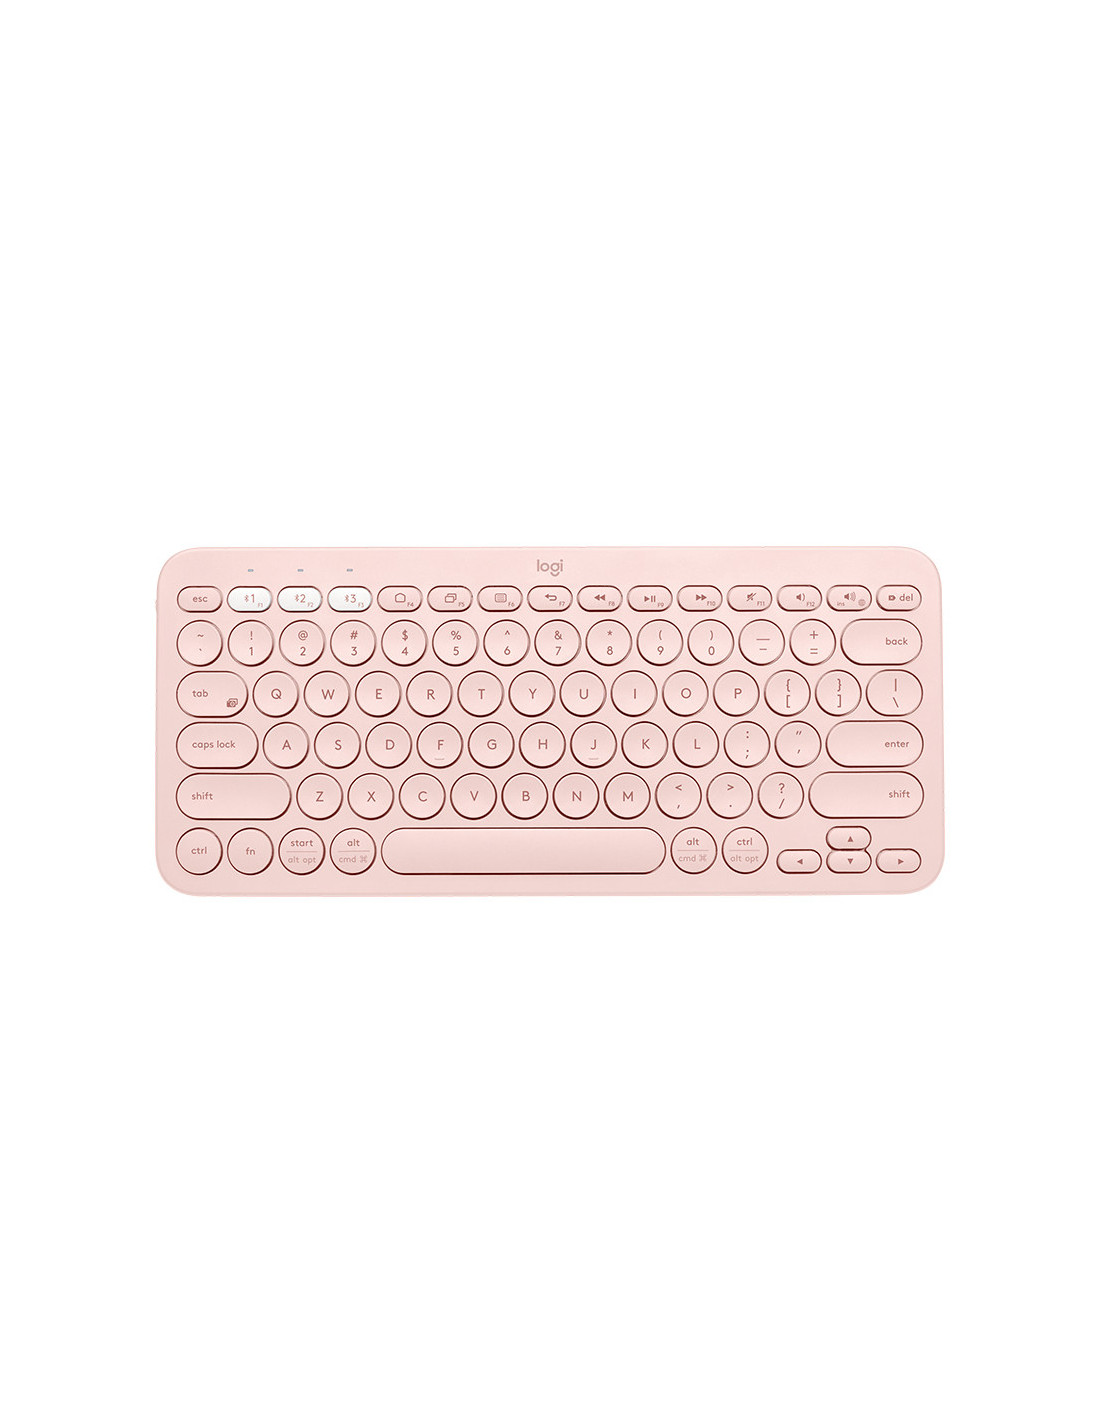 Logitech K380 Wireless Keyboard - Pink (Spanish)